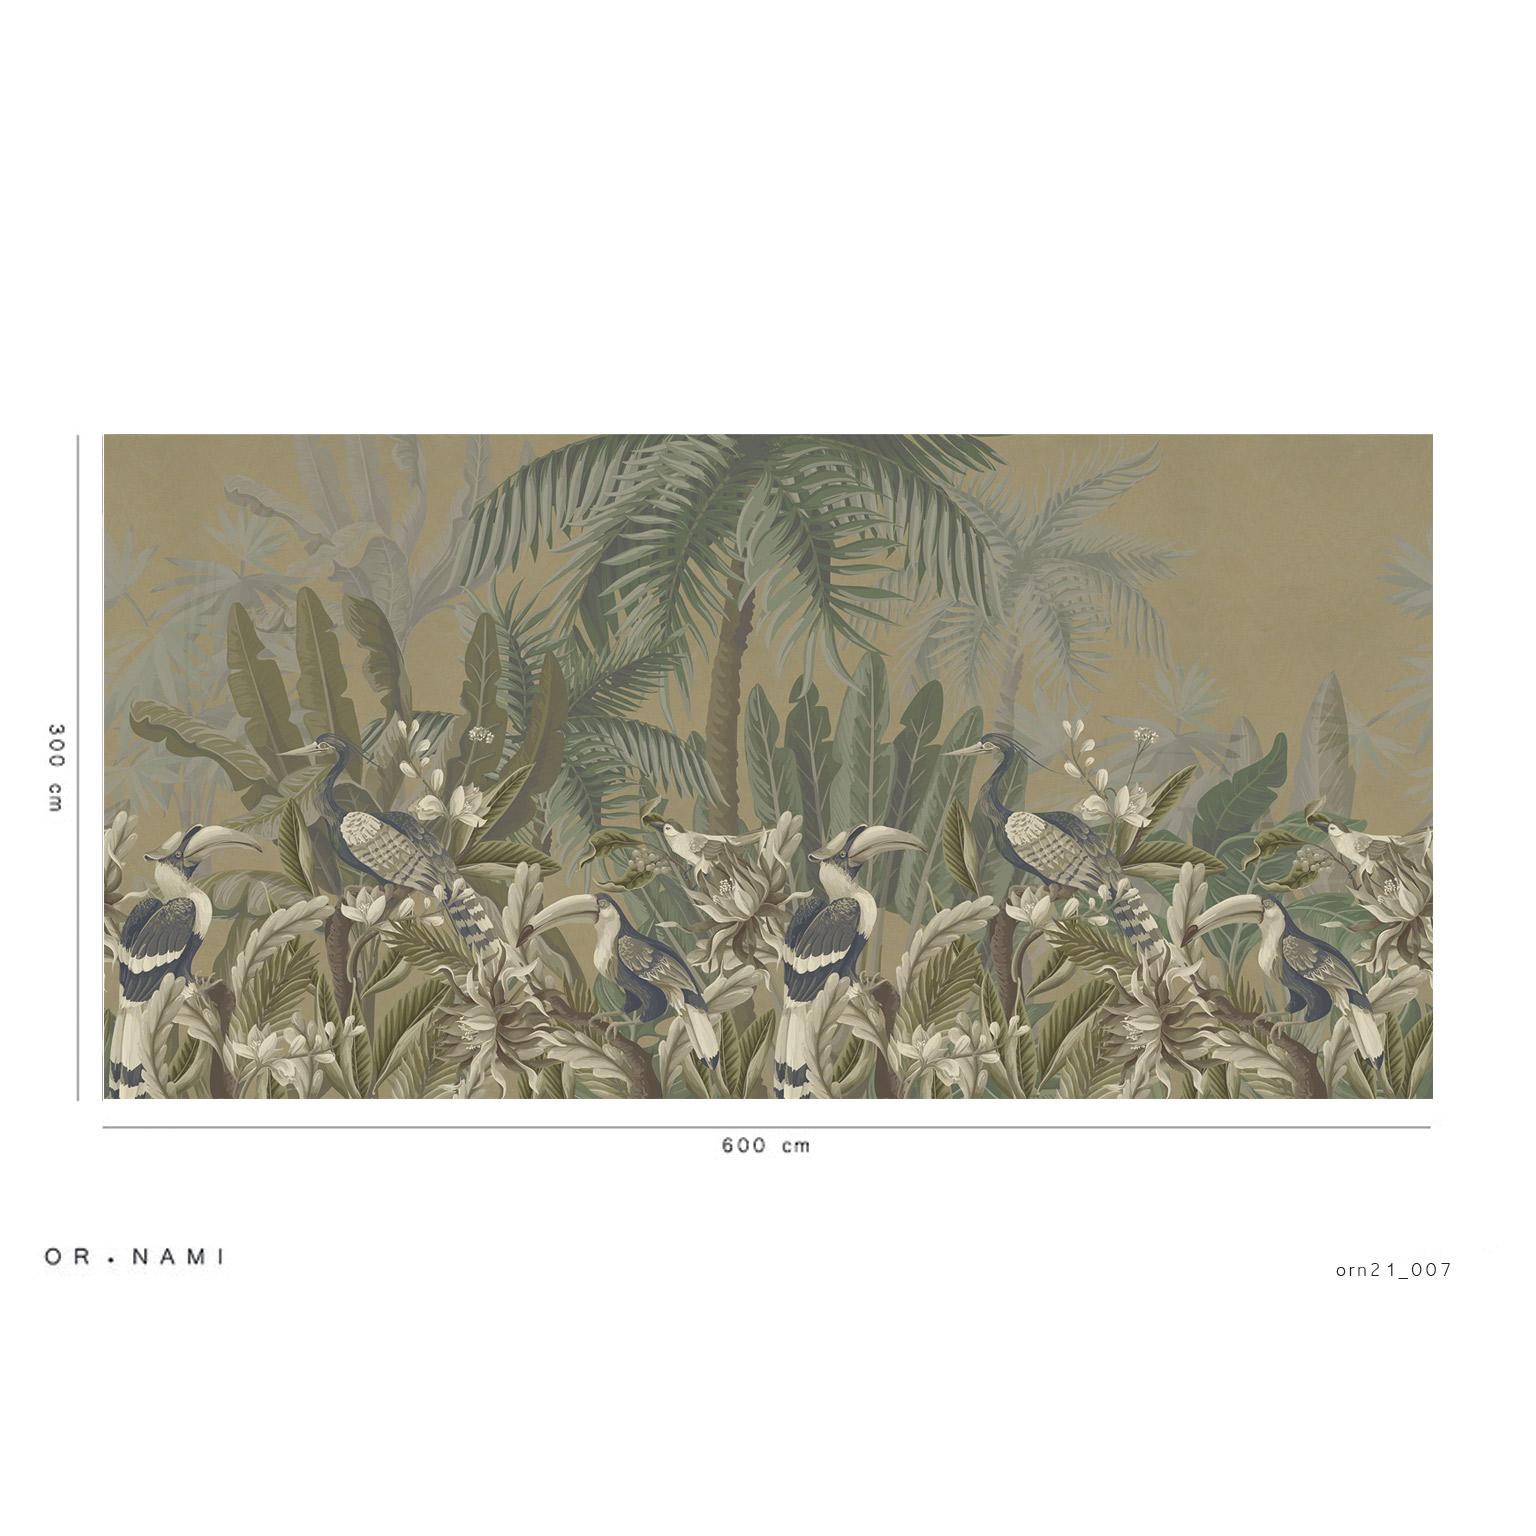 Italian Ornami Tropical Jungle Birds Vinyl Wallpaper Made in Italy Digital Printing For Sale